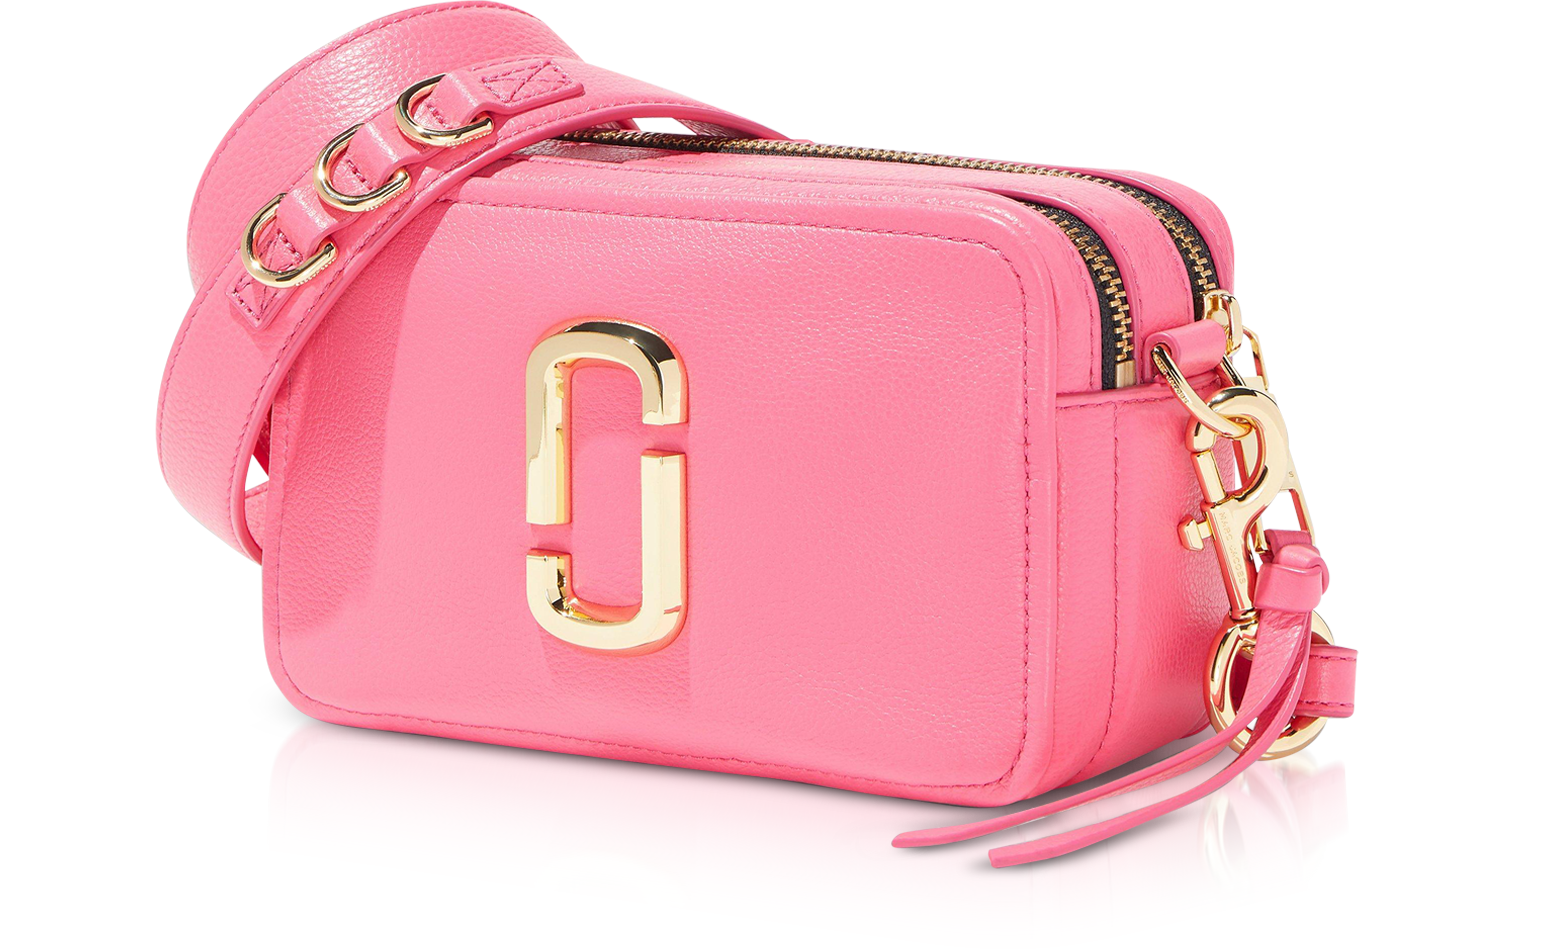 Marc Jacobs Pink Multi Jelly Shot bag- VieTrendy - Rent Fashion